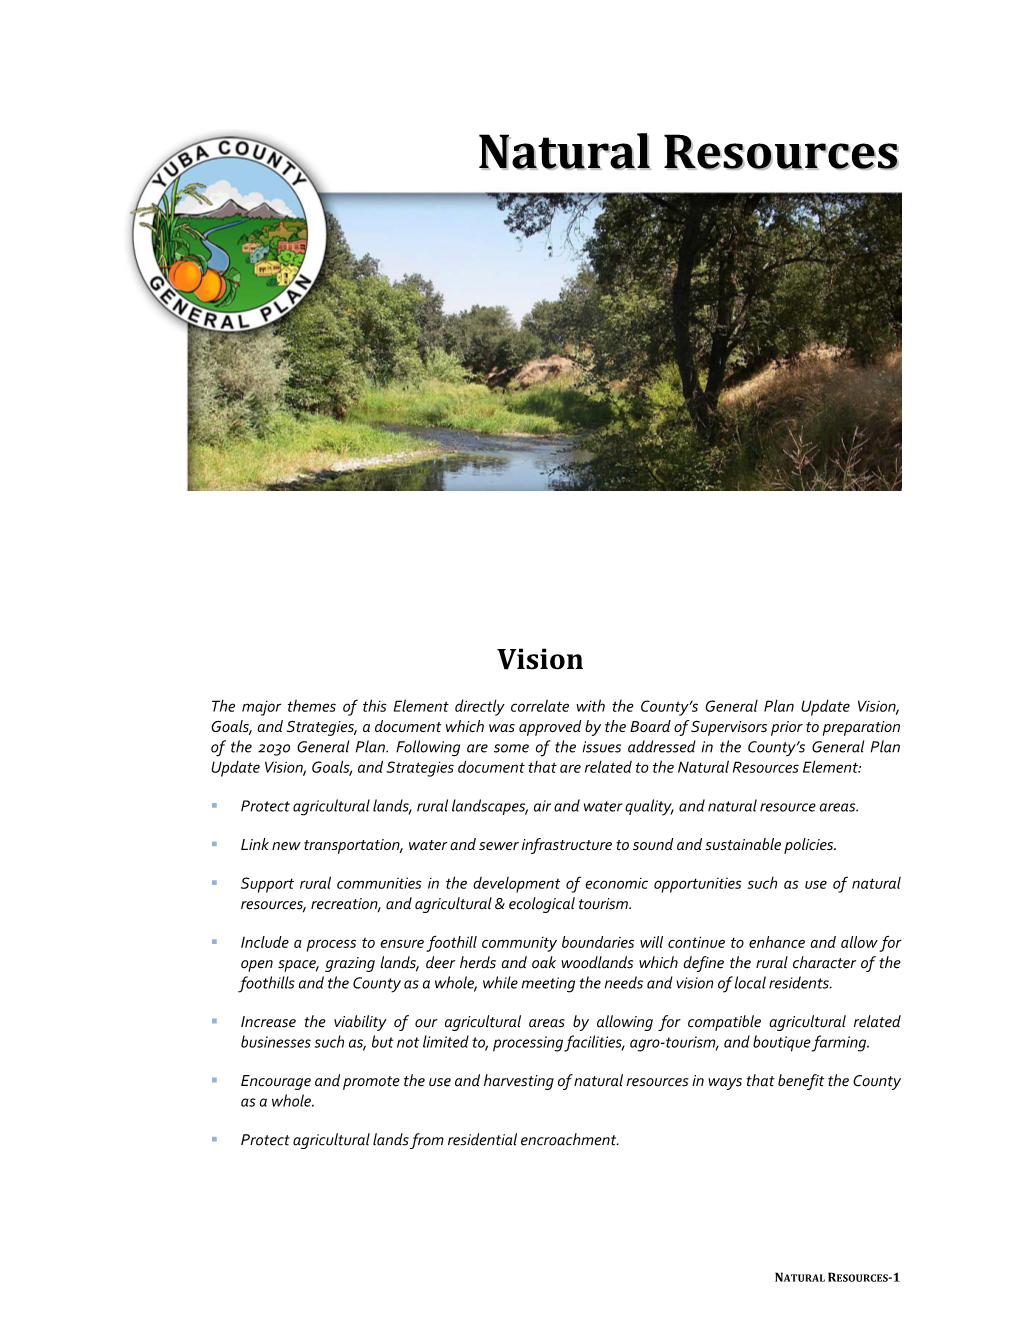 Natural Resource Element